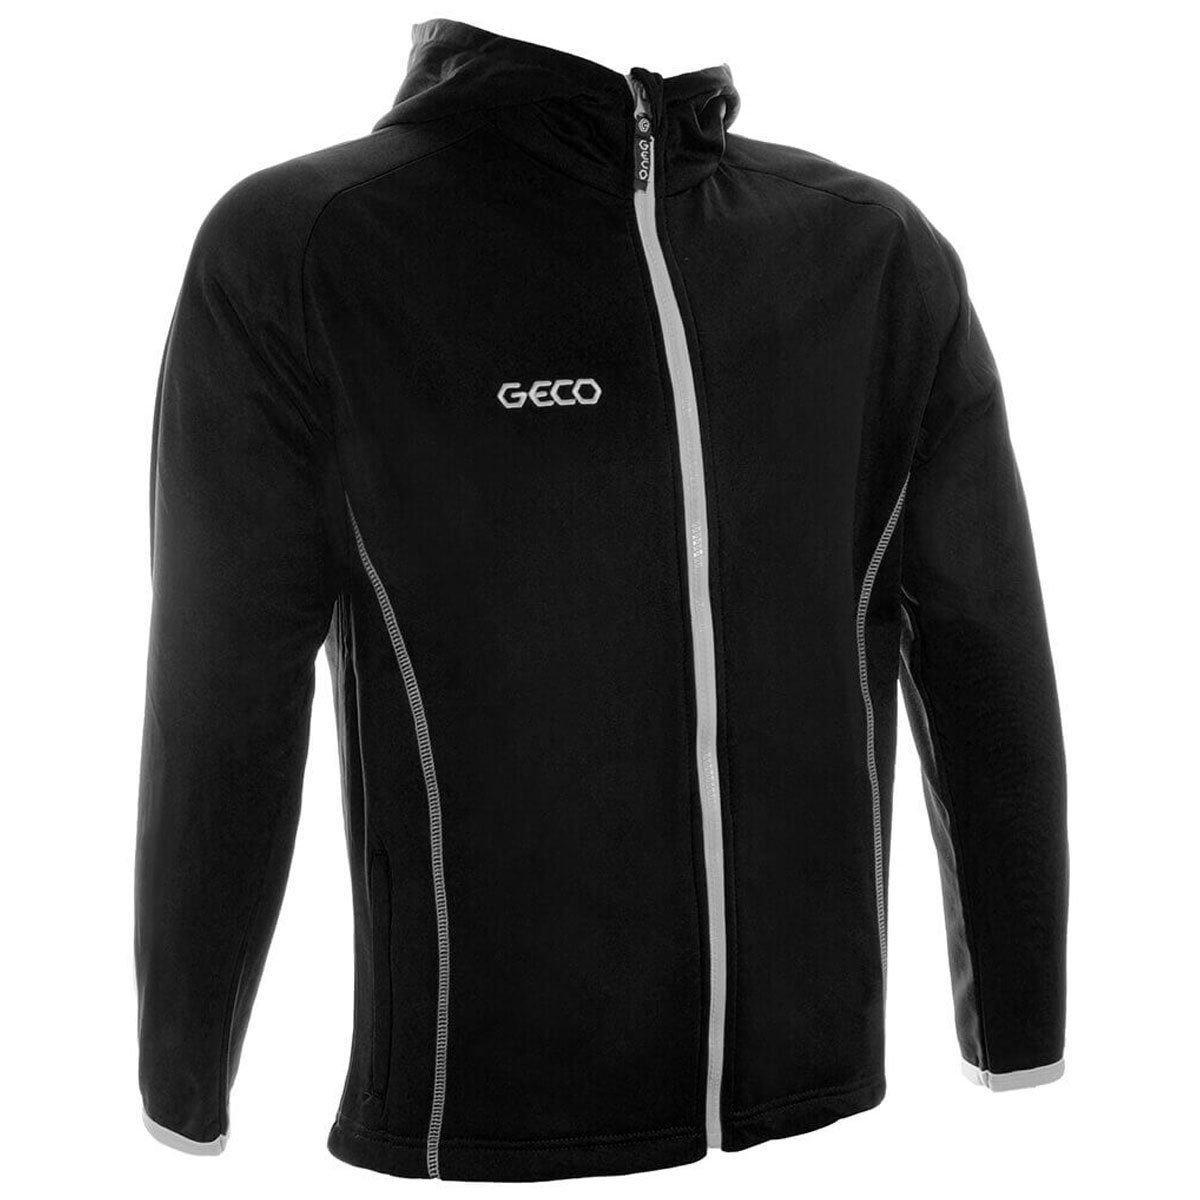 Geco Geco mit Hurrican Präsentationsjacke Fußball Trainingsjacke Trainingsjacke Kapuze schwarz Sportswear